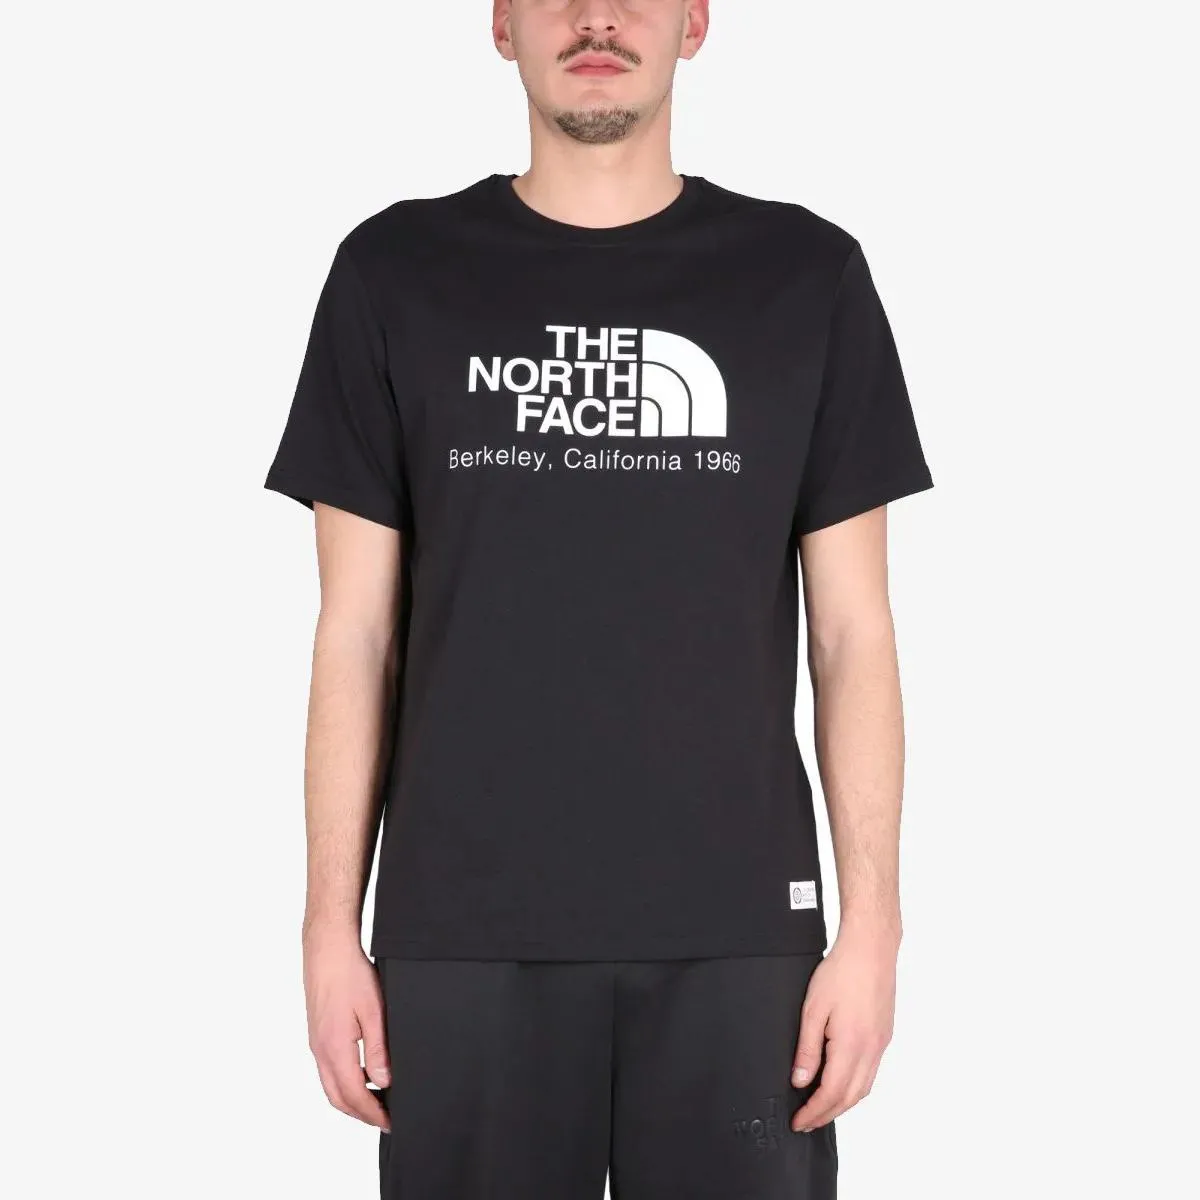 The North Face T-shirt Men’s Berkeley California Tee- In Scrap 